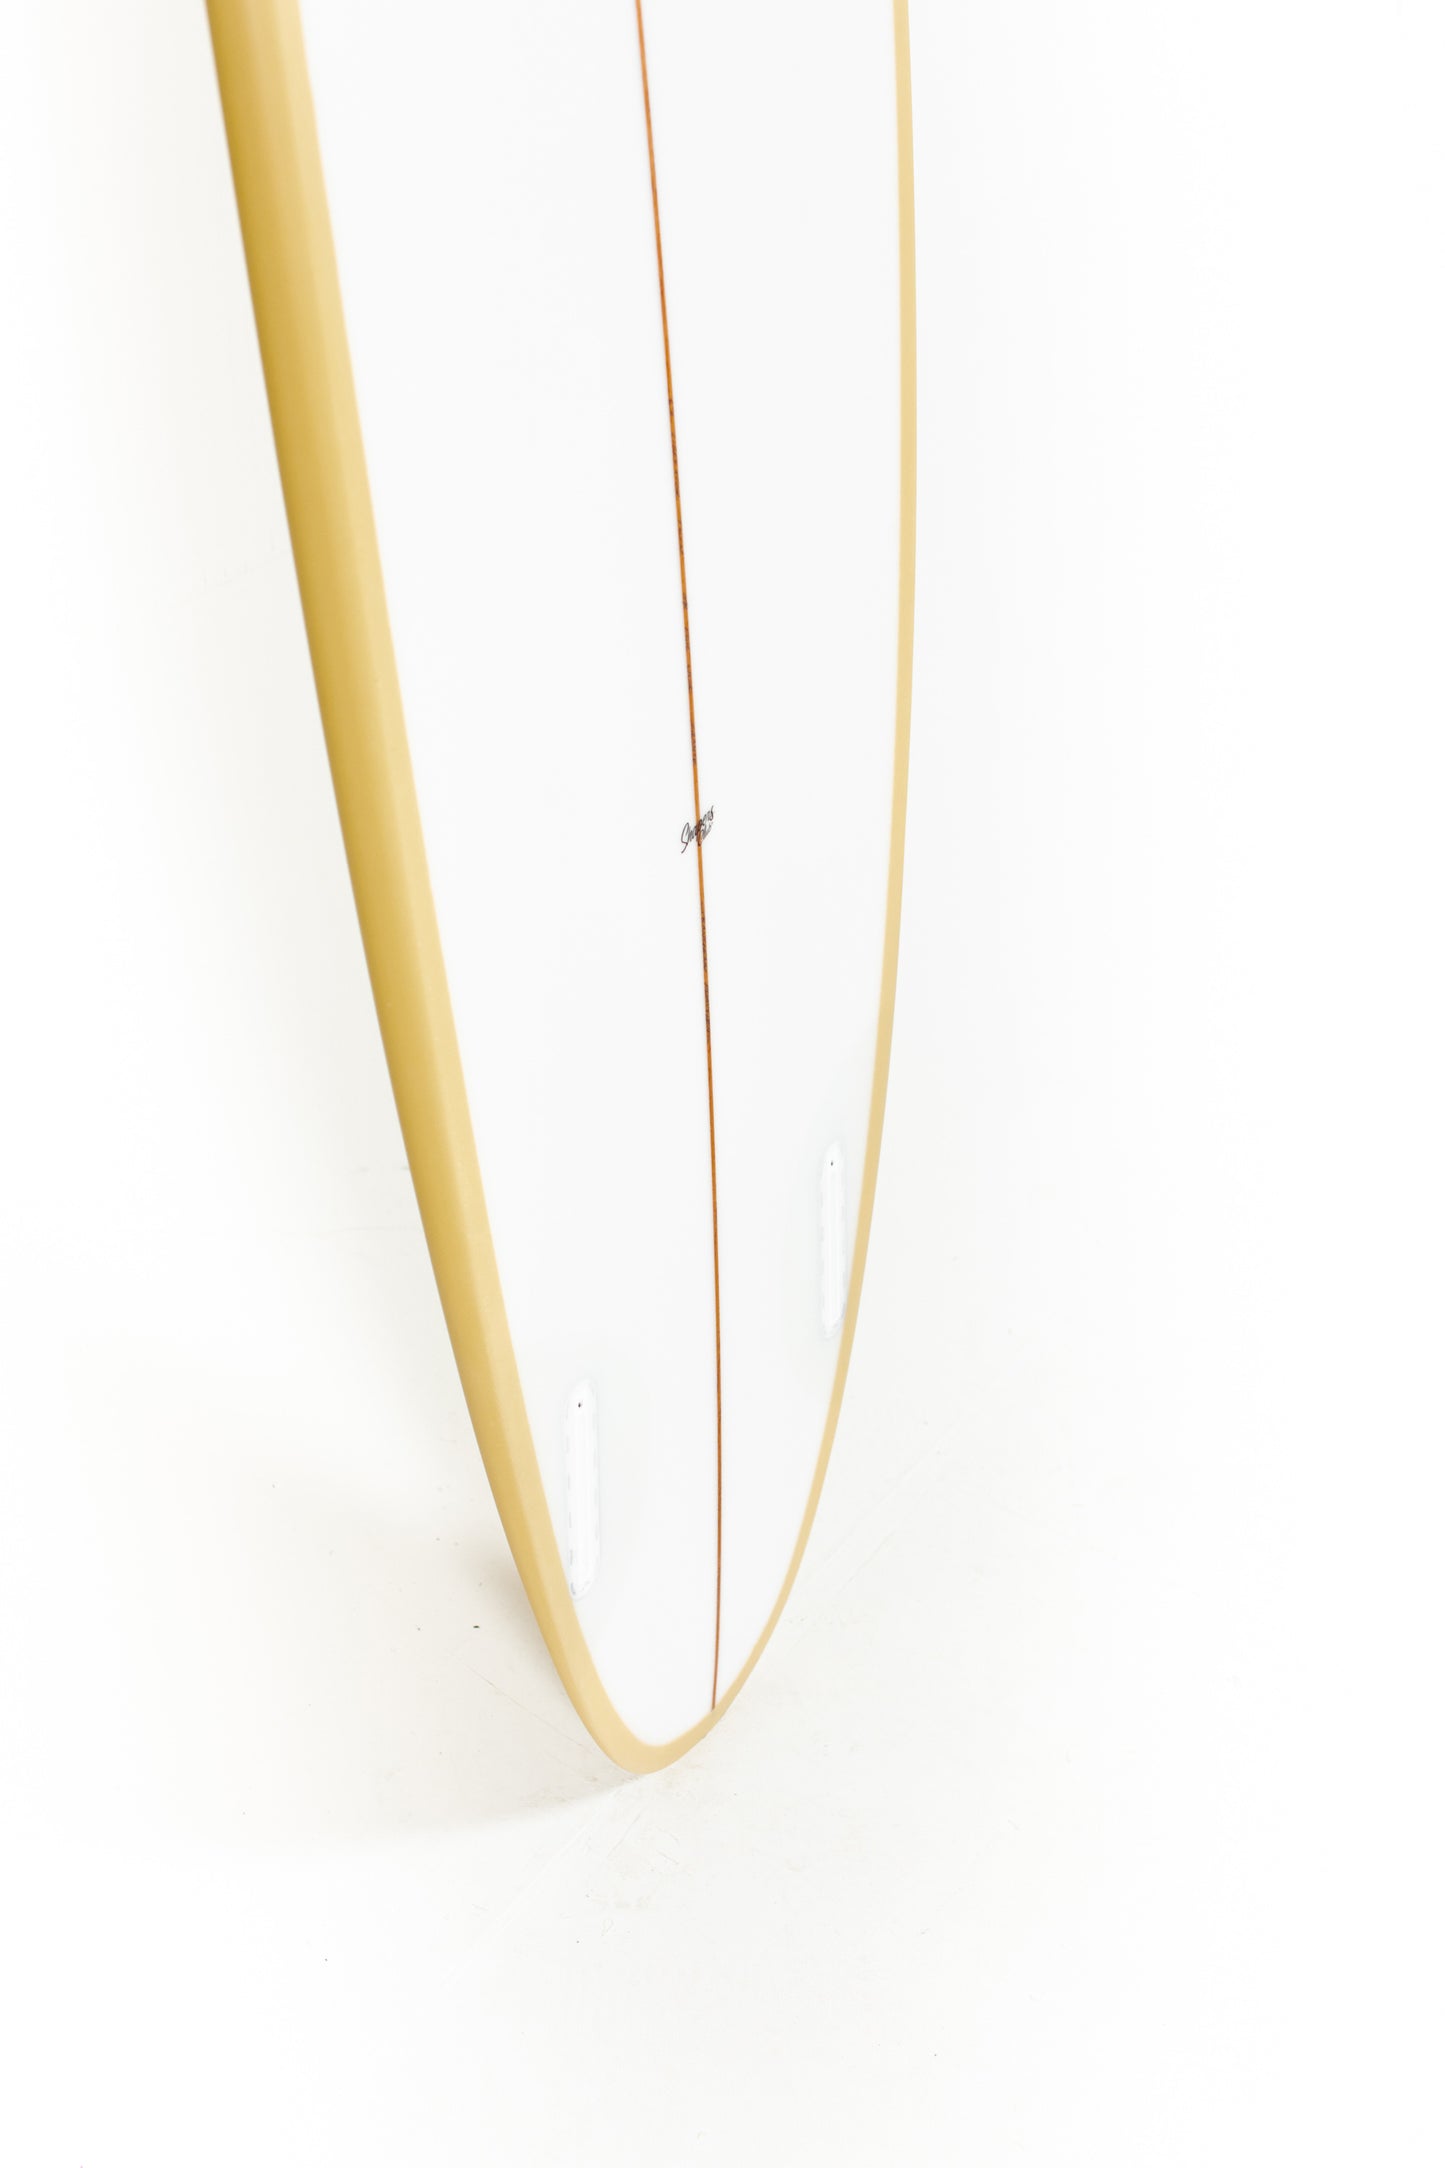 
                  
                    Pukas Surf Shop - Joshua Keogh Surfboard - LIBERATOR TWIN by Joshua Keogh - 6'6" x 21 x 2 1/2 - LIBERATOR66
                  
                